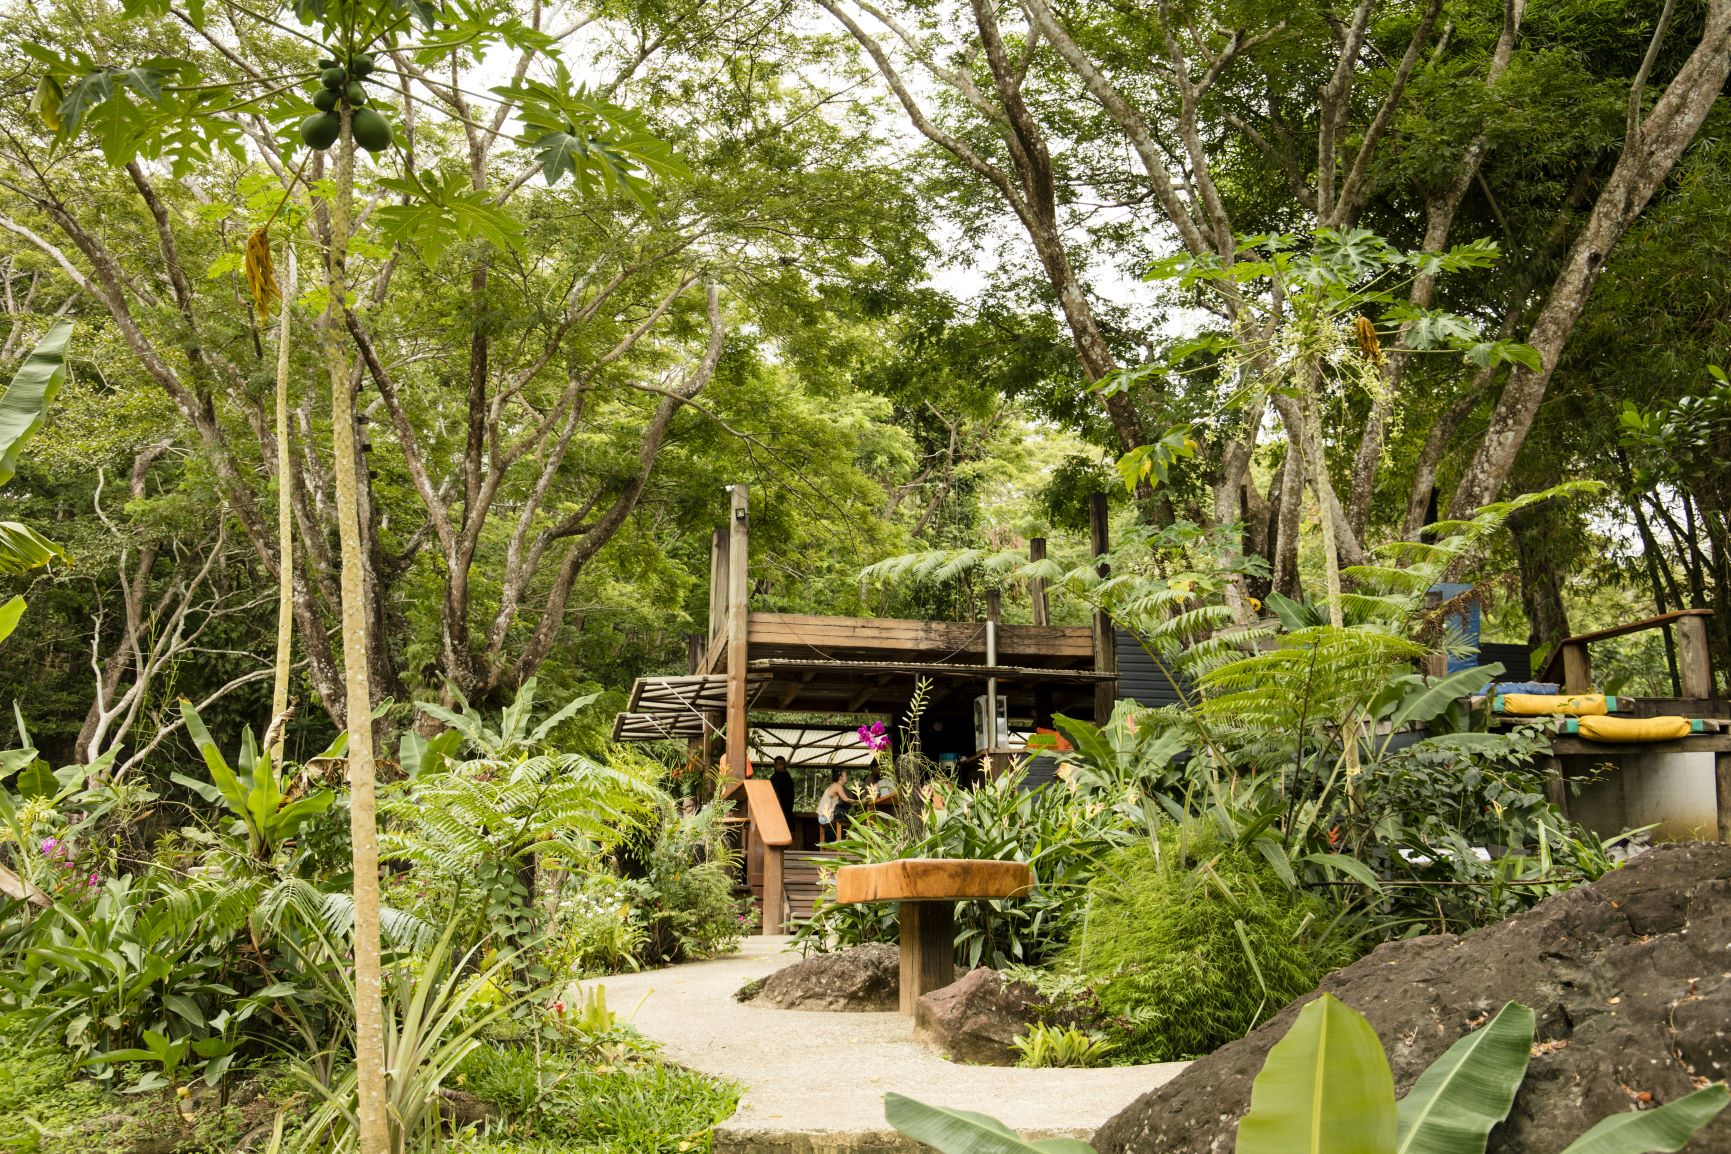 Garden of the sleeping giant in Fiji